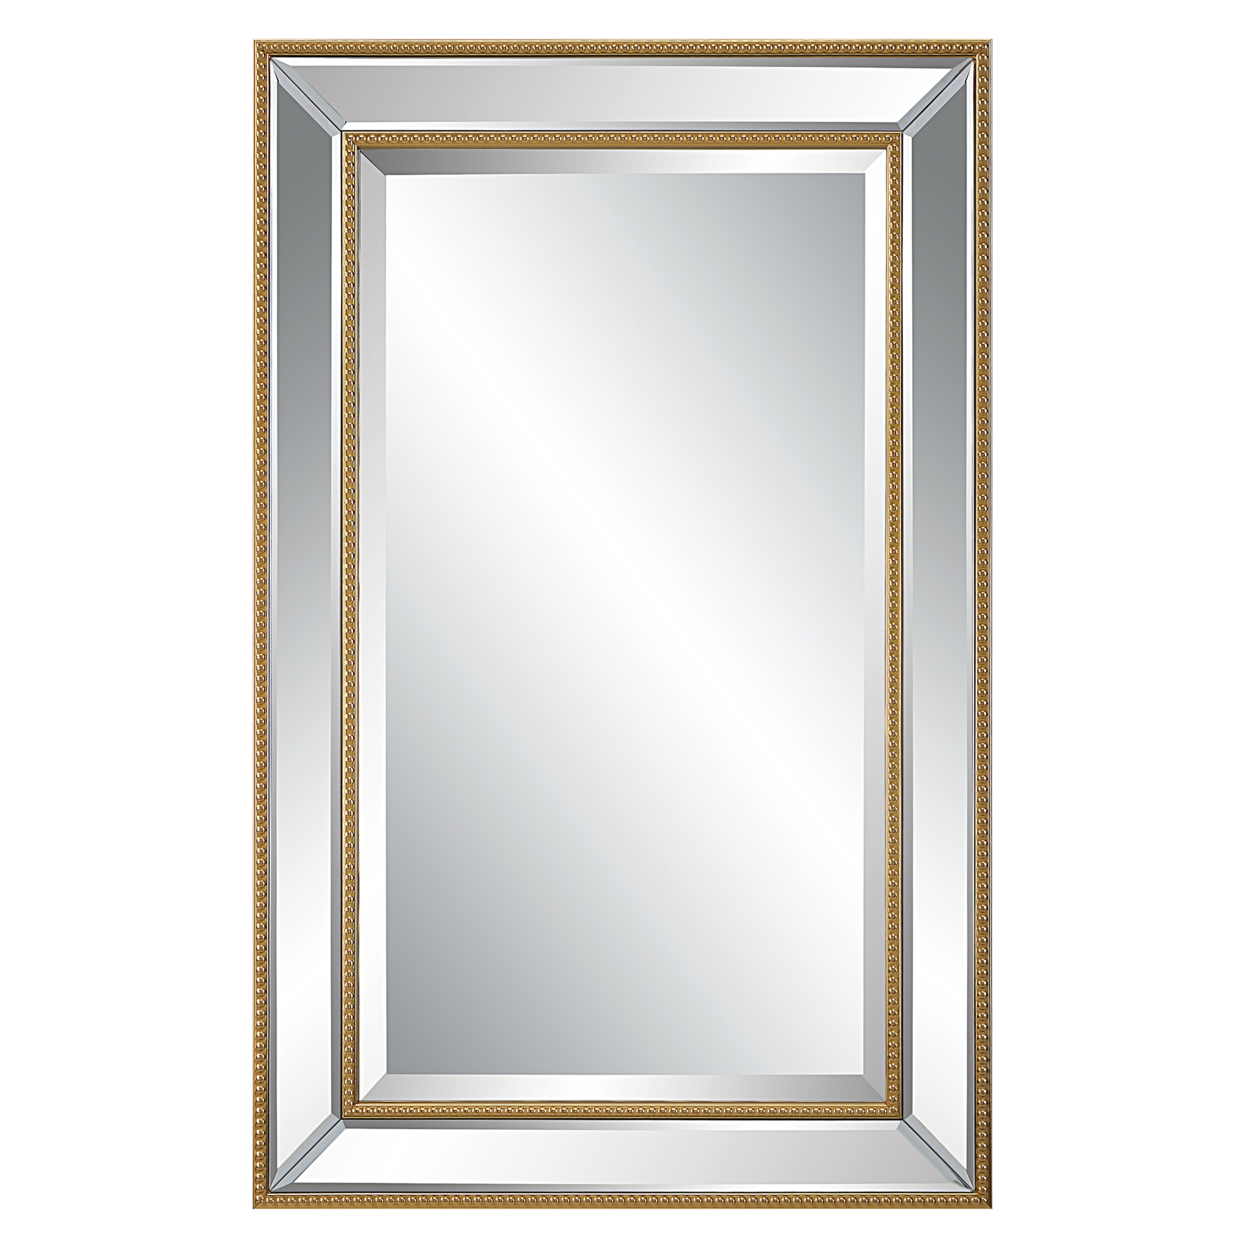 32 Inch Wood Wall Mirror, Beveled Mirror Frame, Gold, Saltoro Sherpi